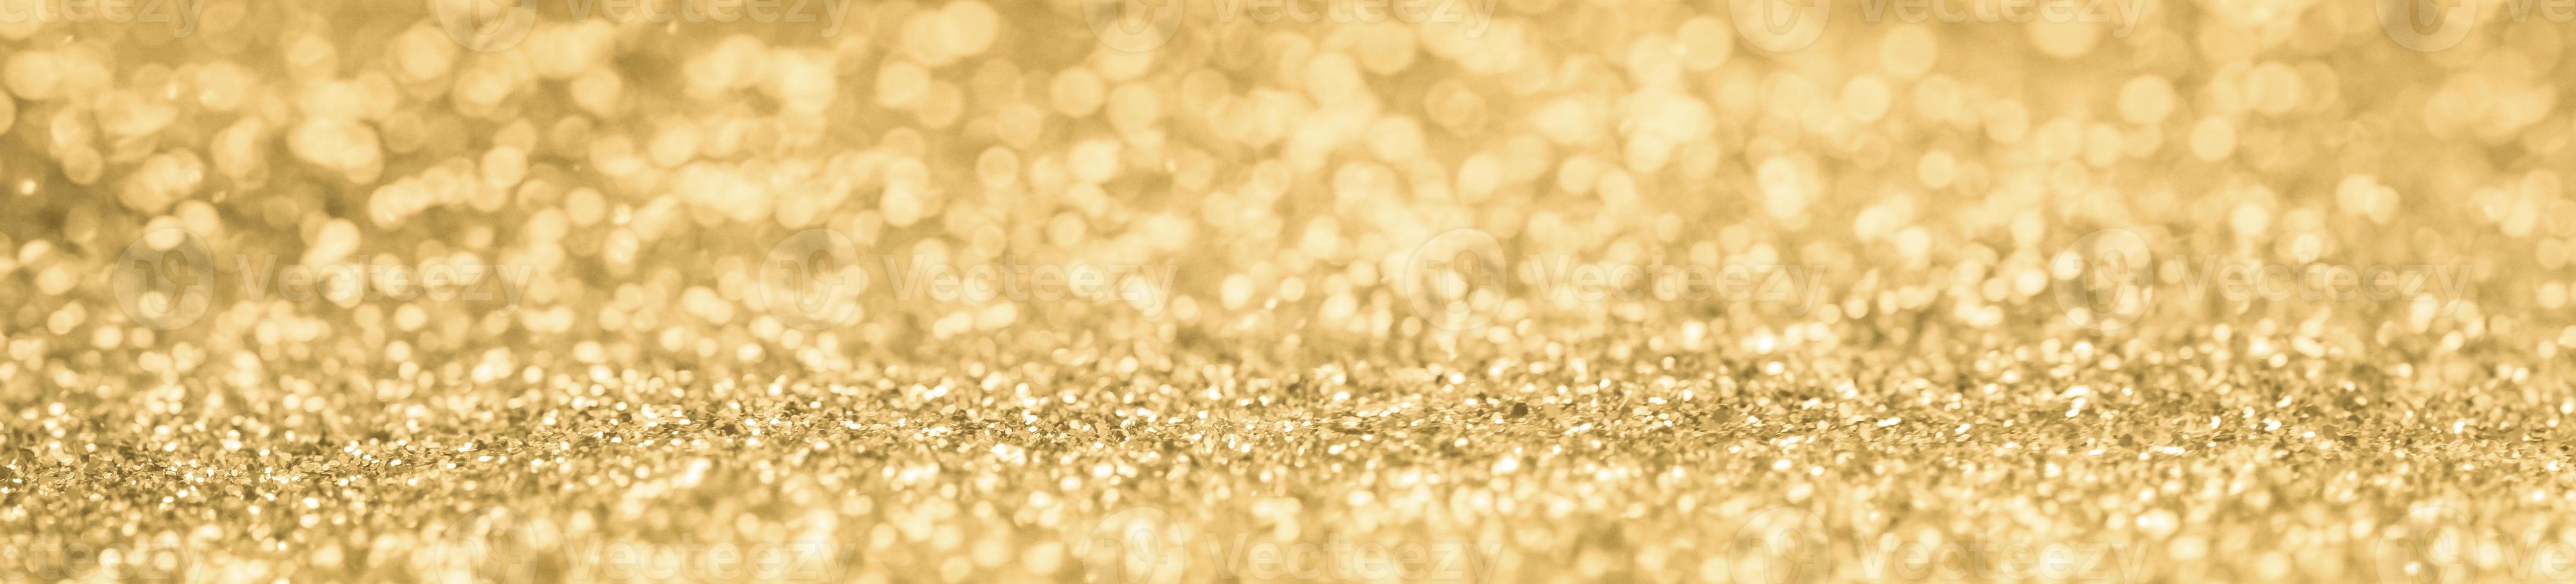 gouden glitter banner foto